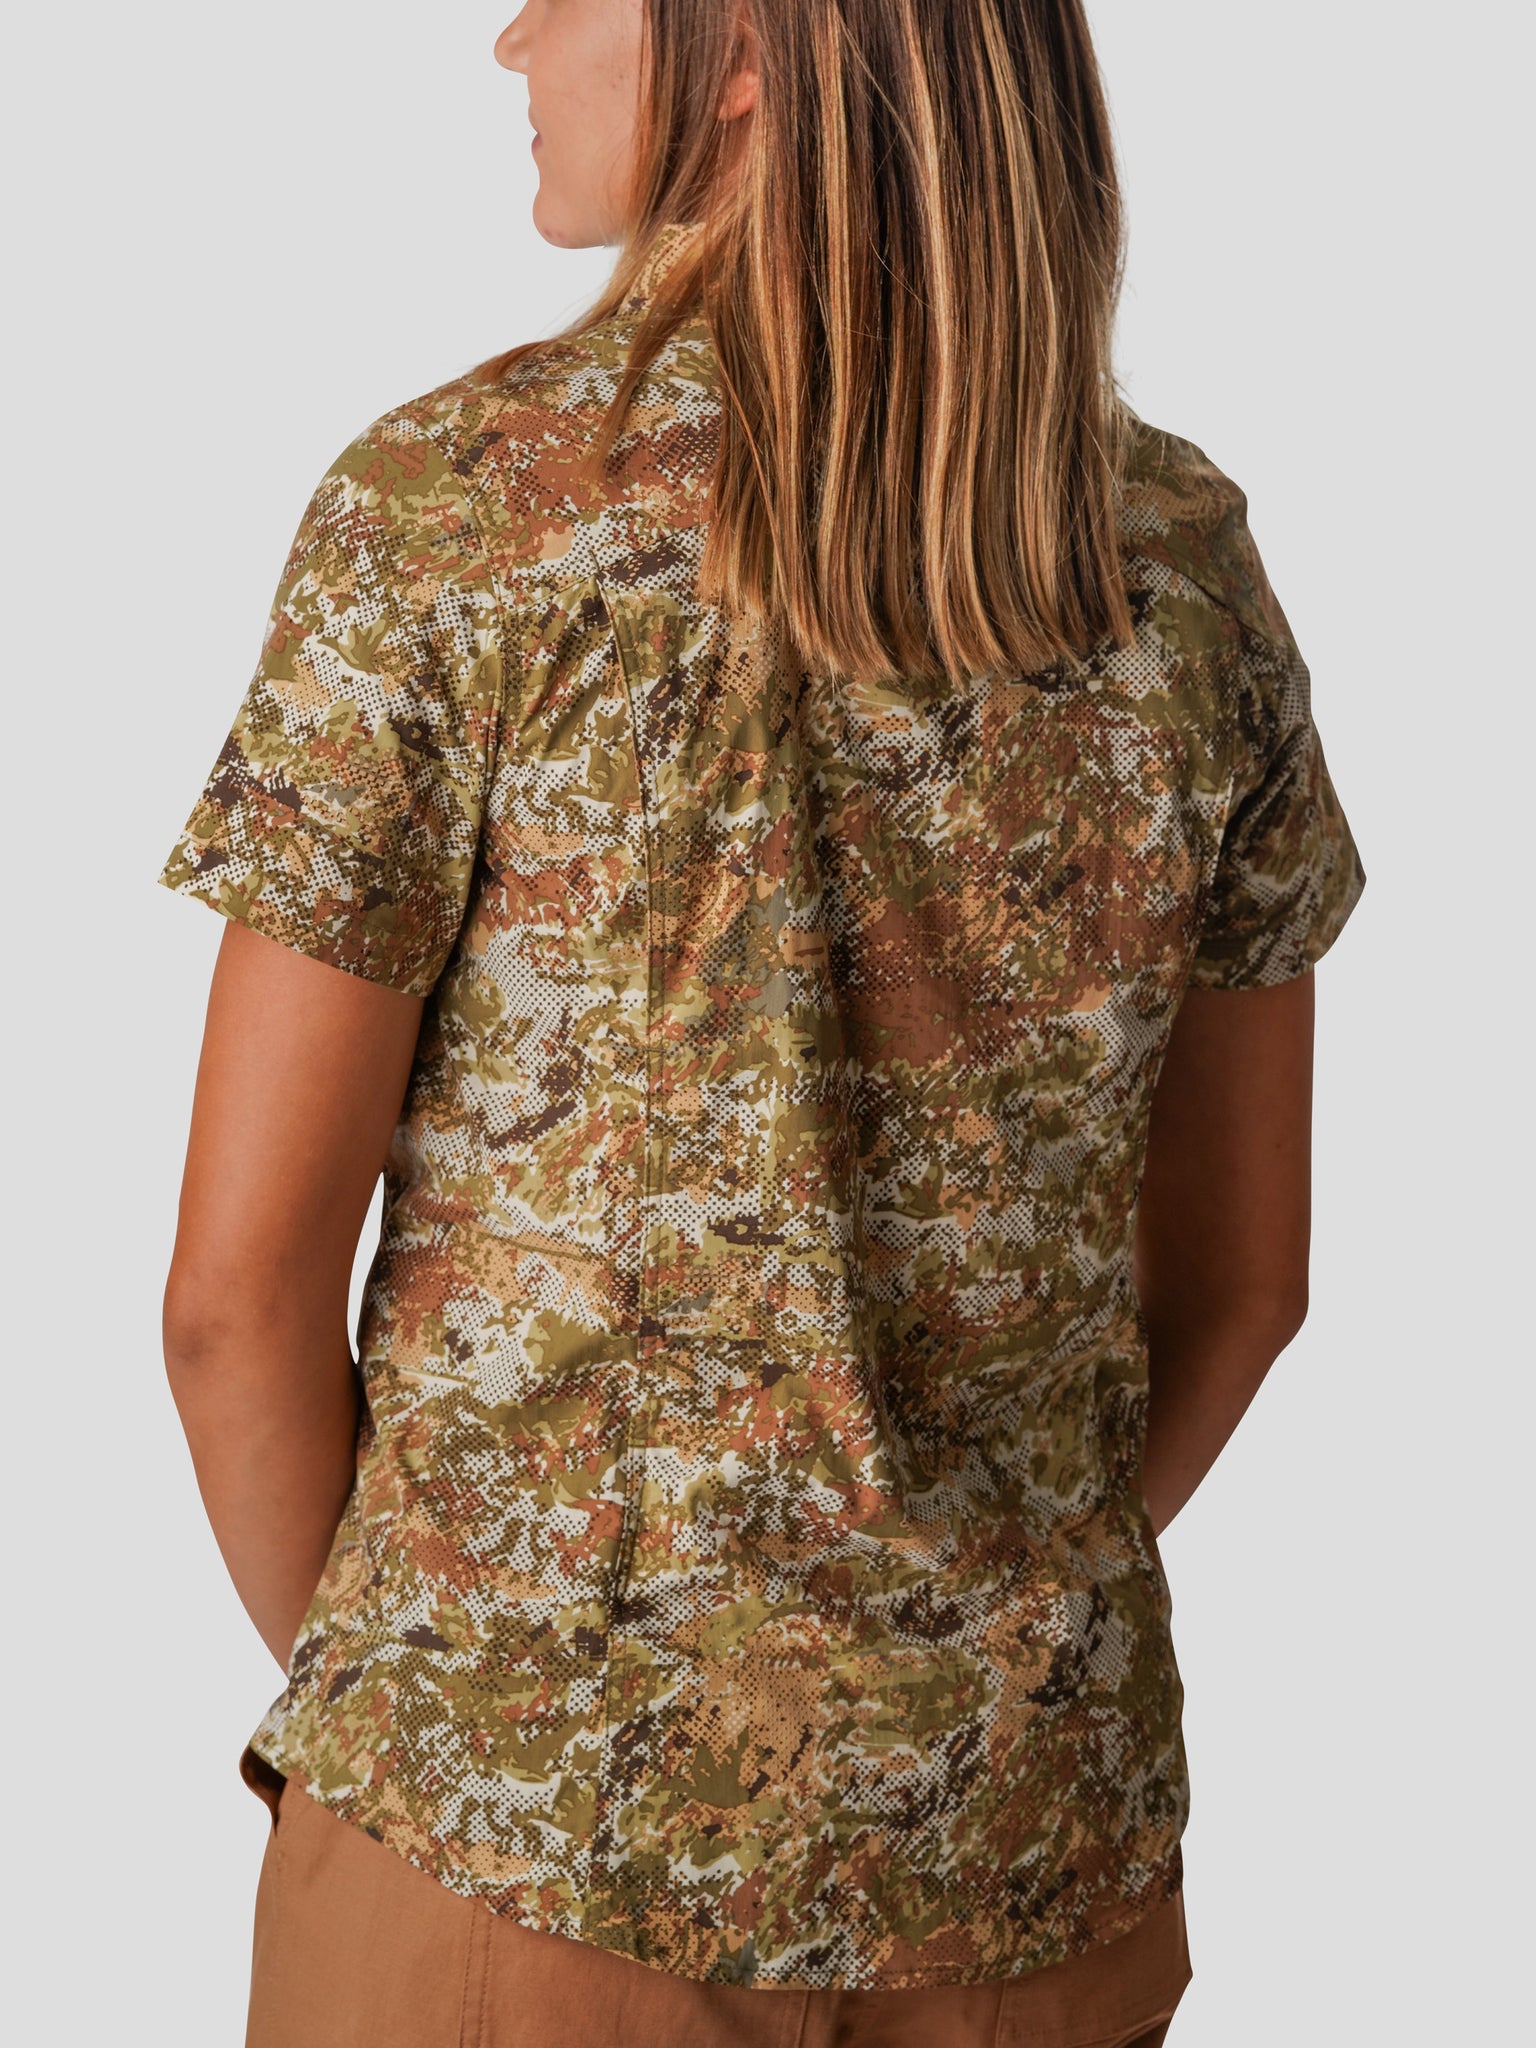 Women's Hunting Shirt Short Sleeve - Midland